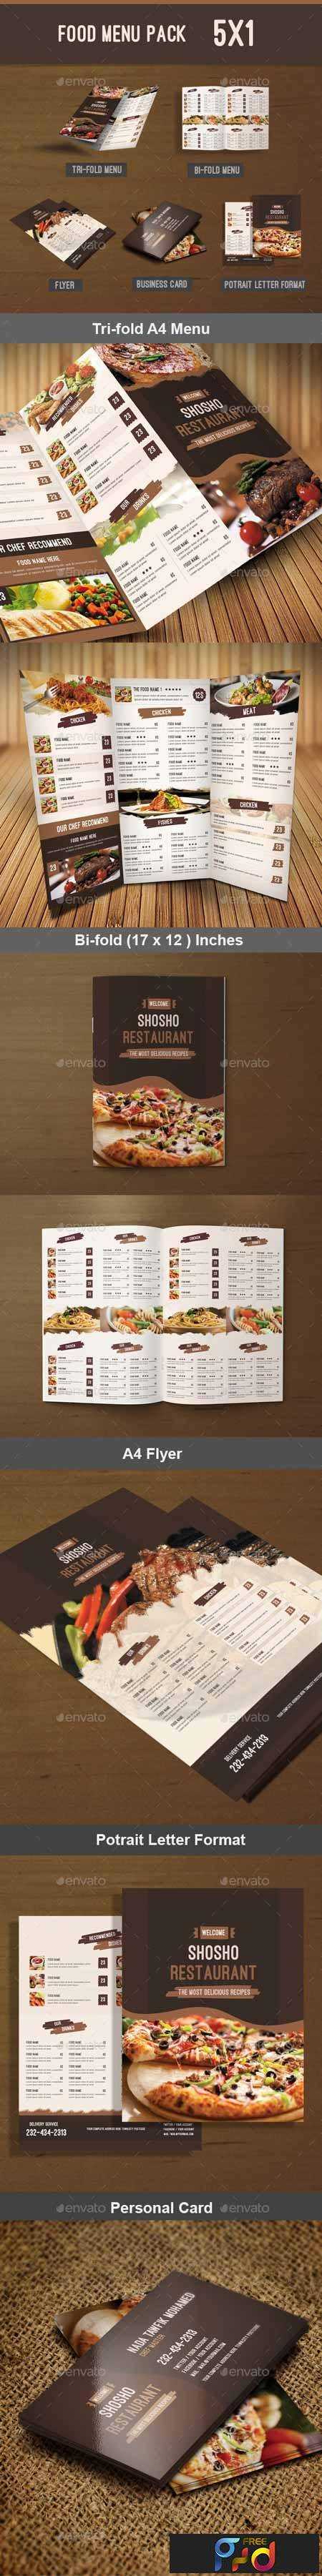 freepsdvn-com_1436305584_food-menu-pack-12005905